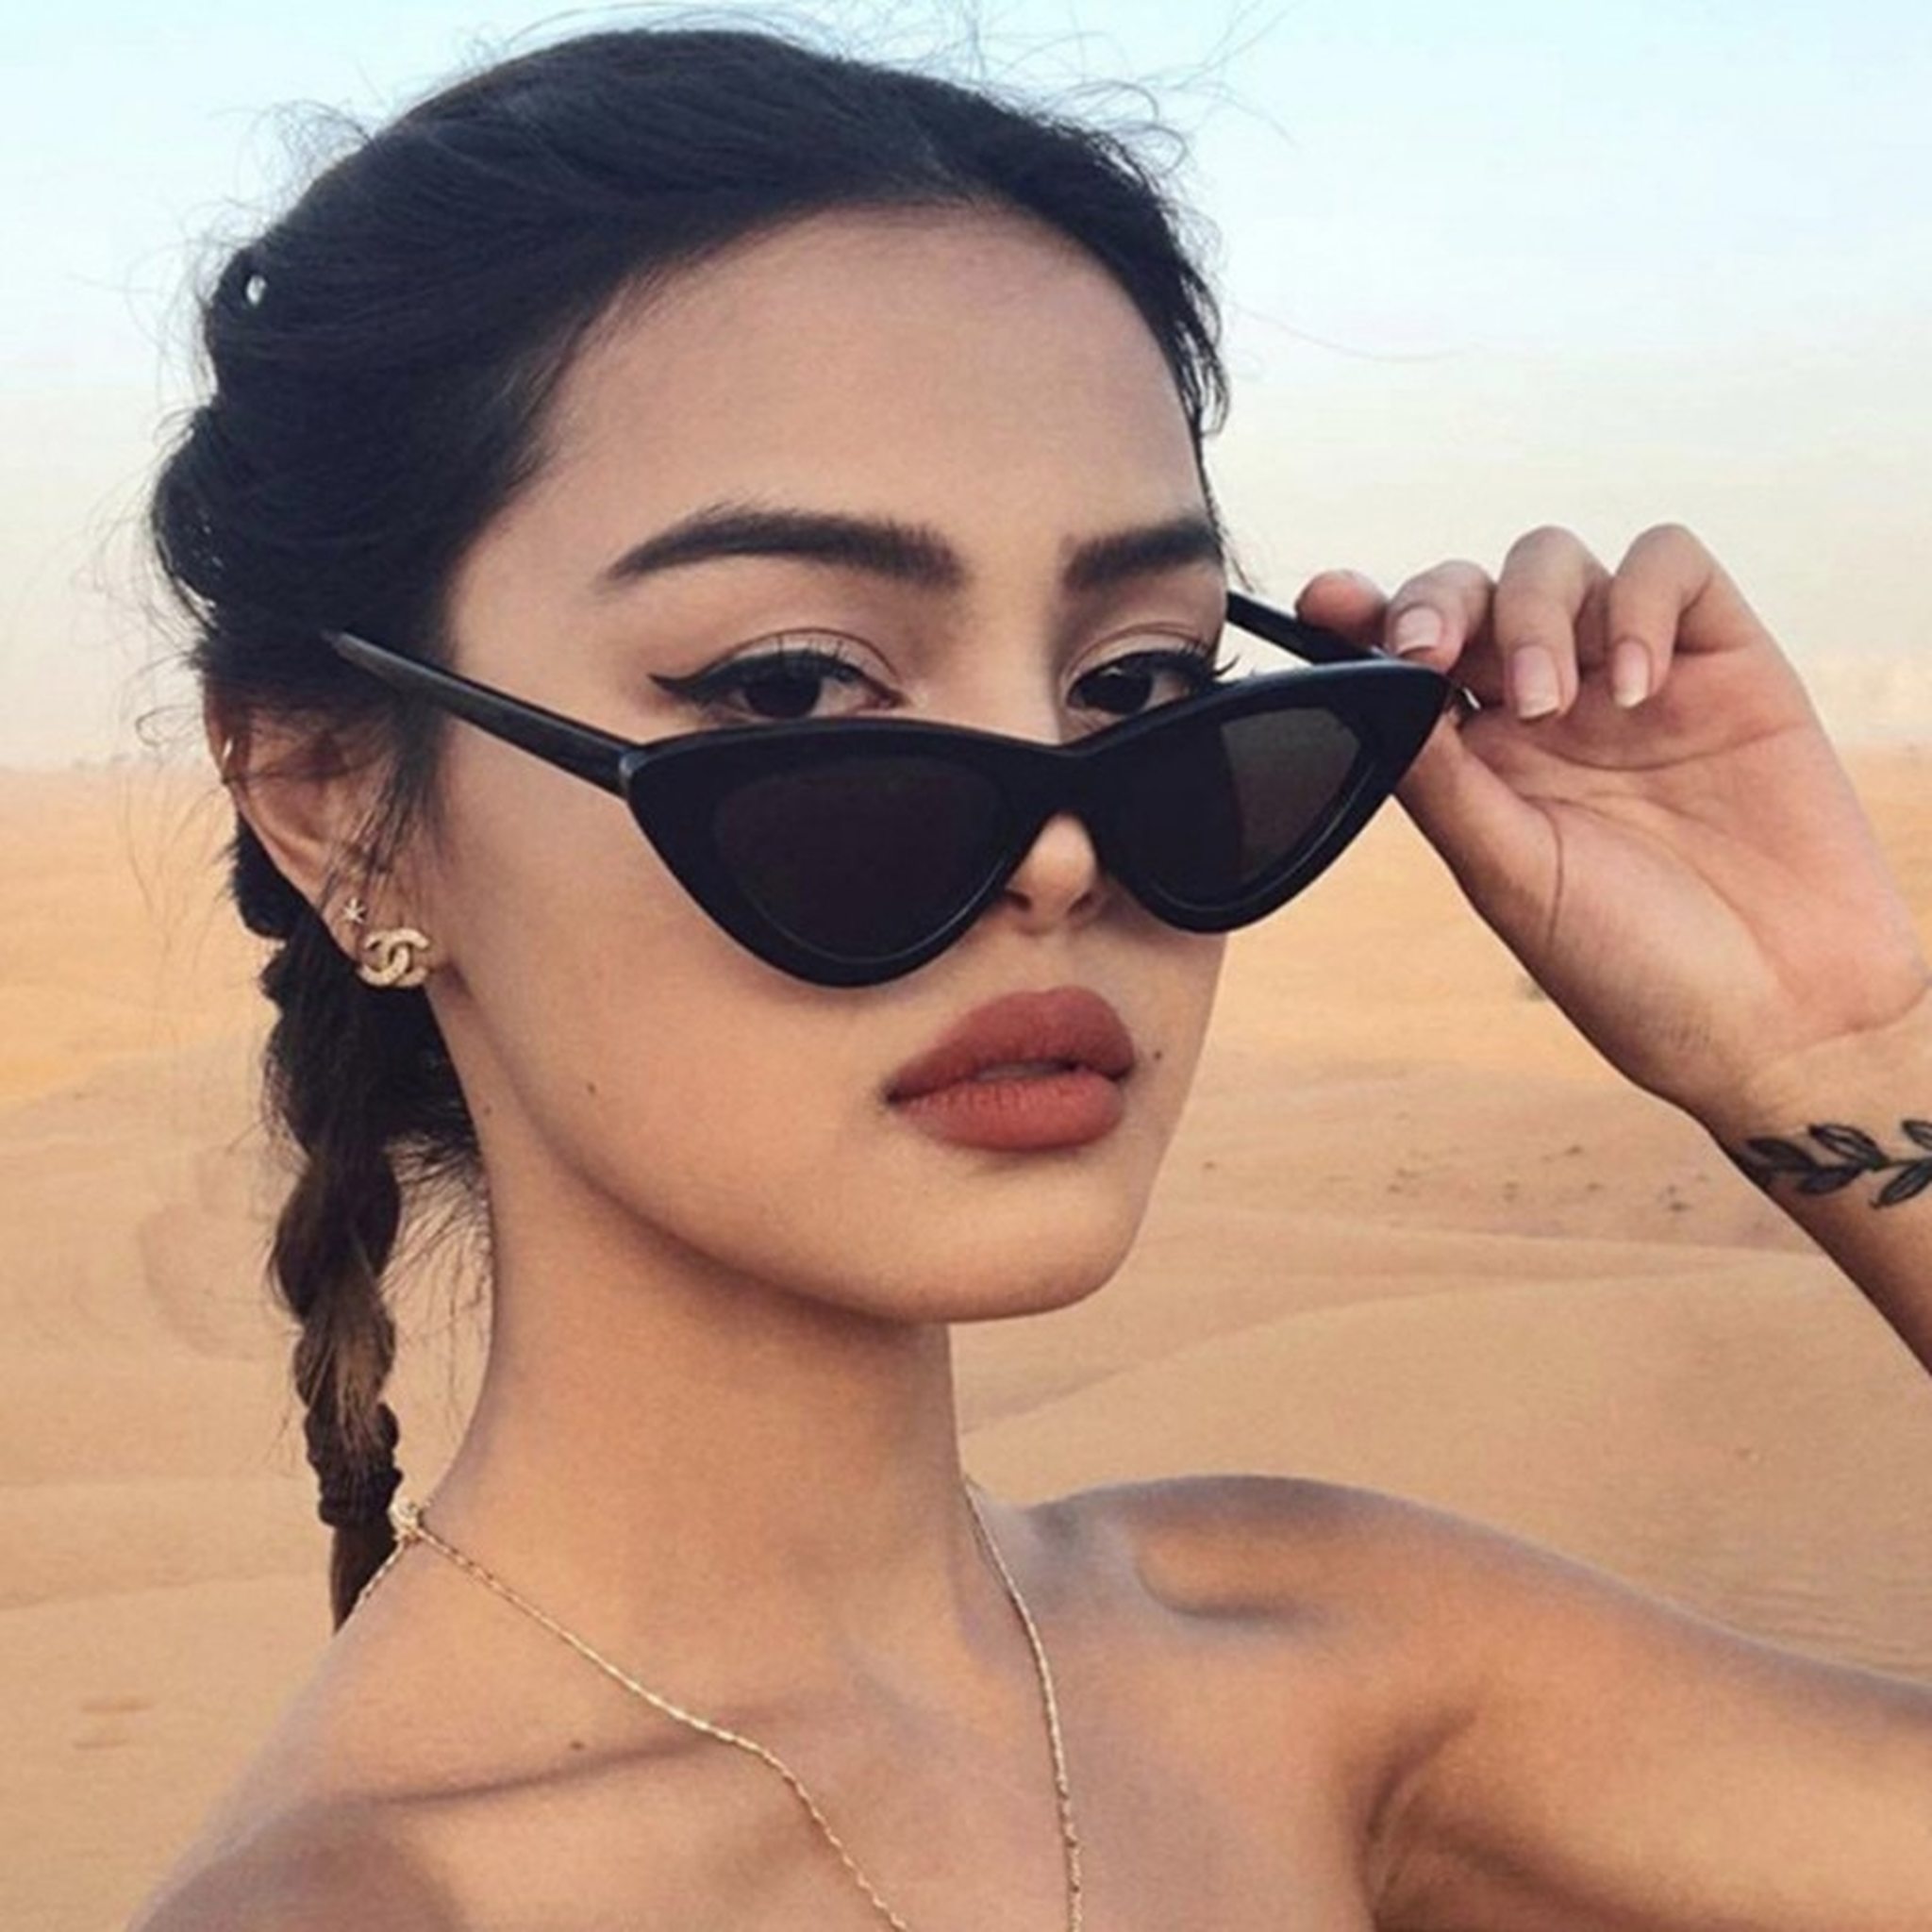 Stunning Sunglasses for Fashionable Girls